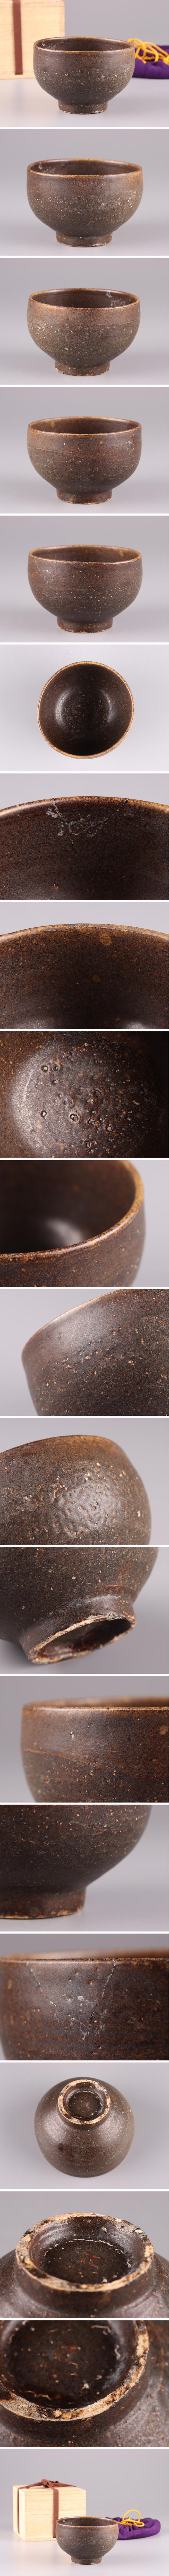 SALE豊富な古美術 茶道具 朝鮮古陶磁器 高麗 黒高麗 茶碗 古作 時代物 極上品 初だし品 3614 高麗